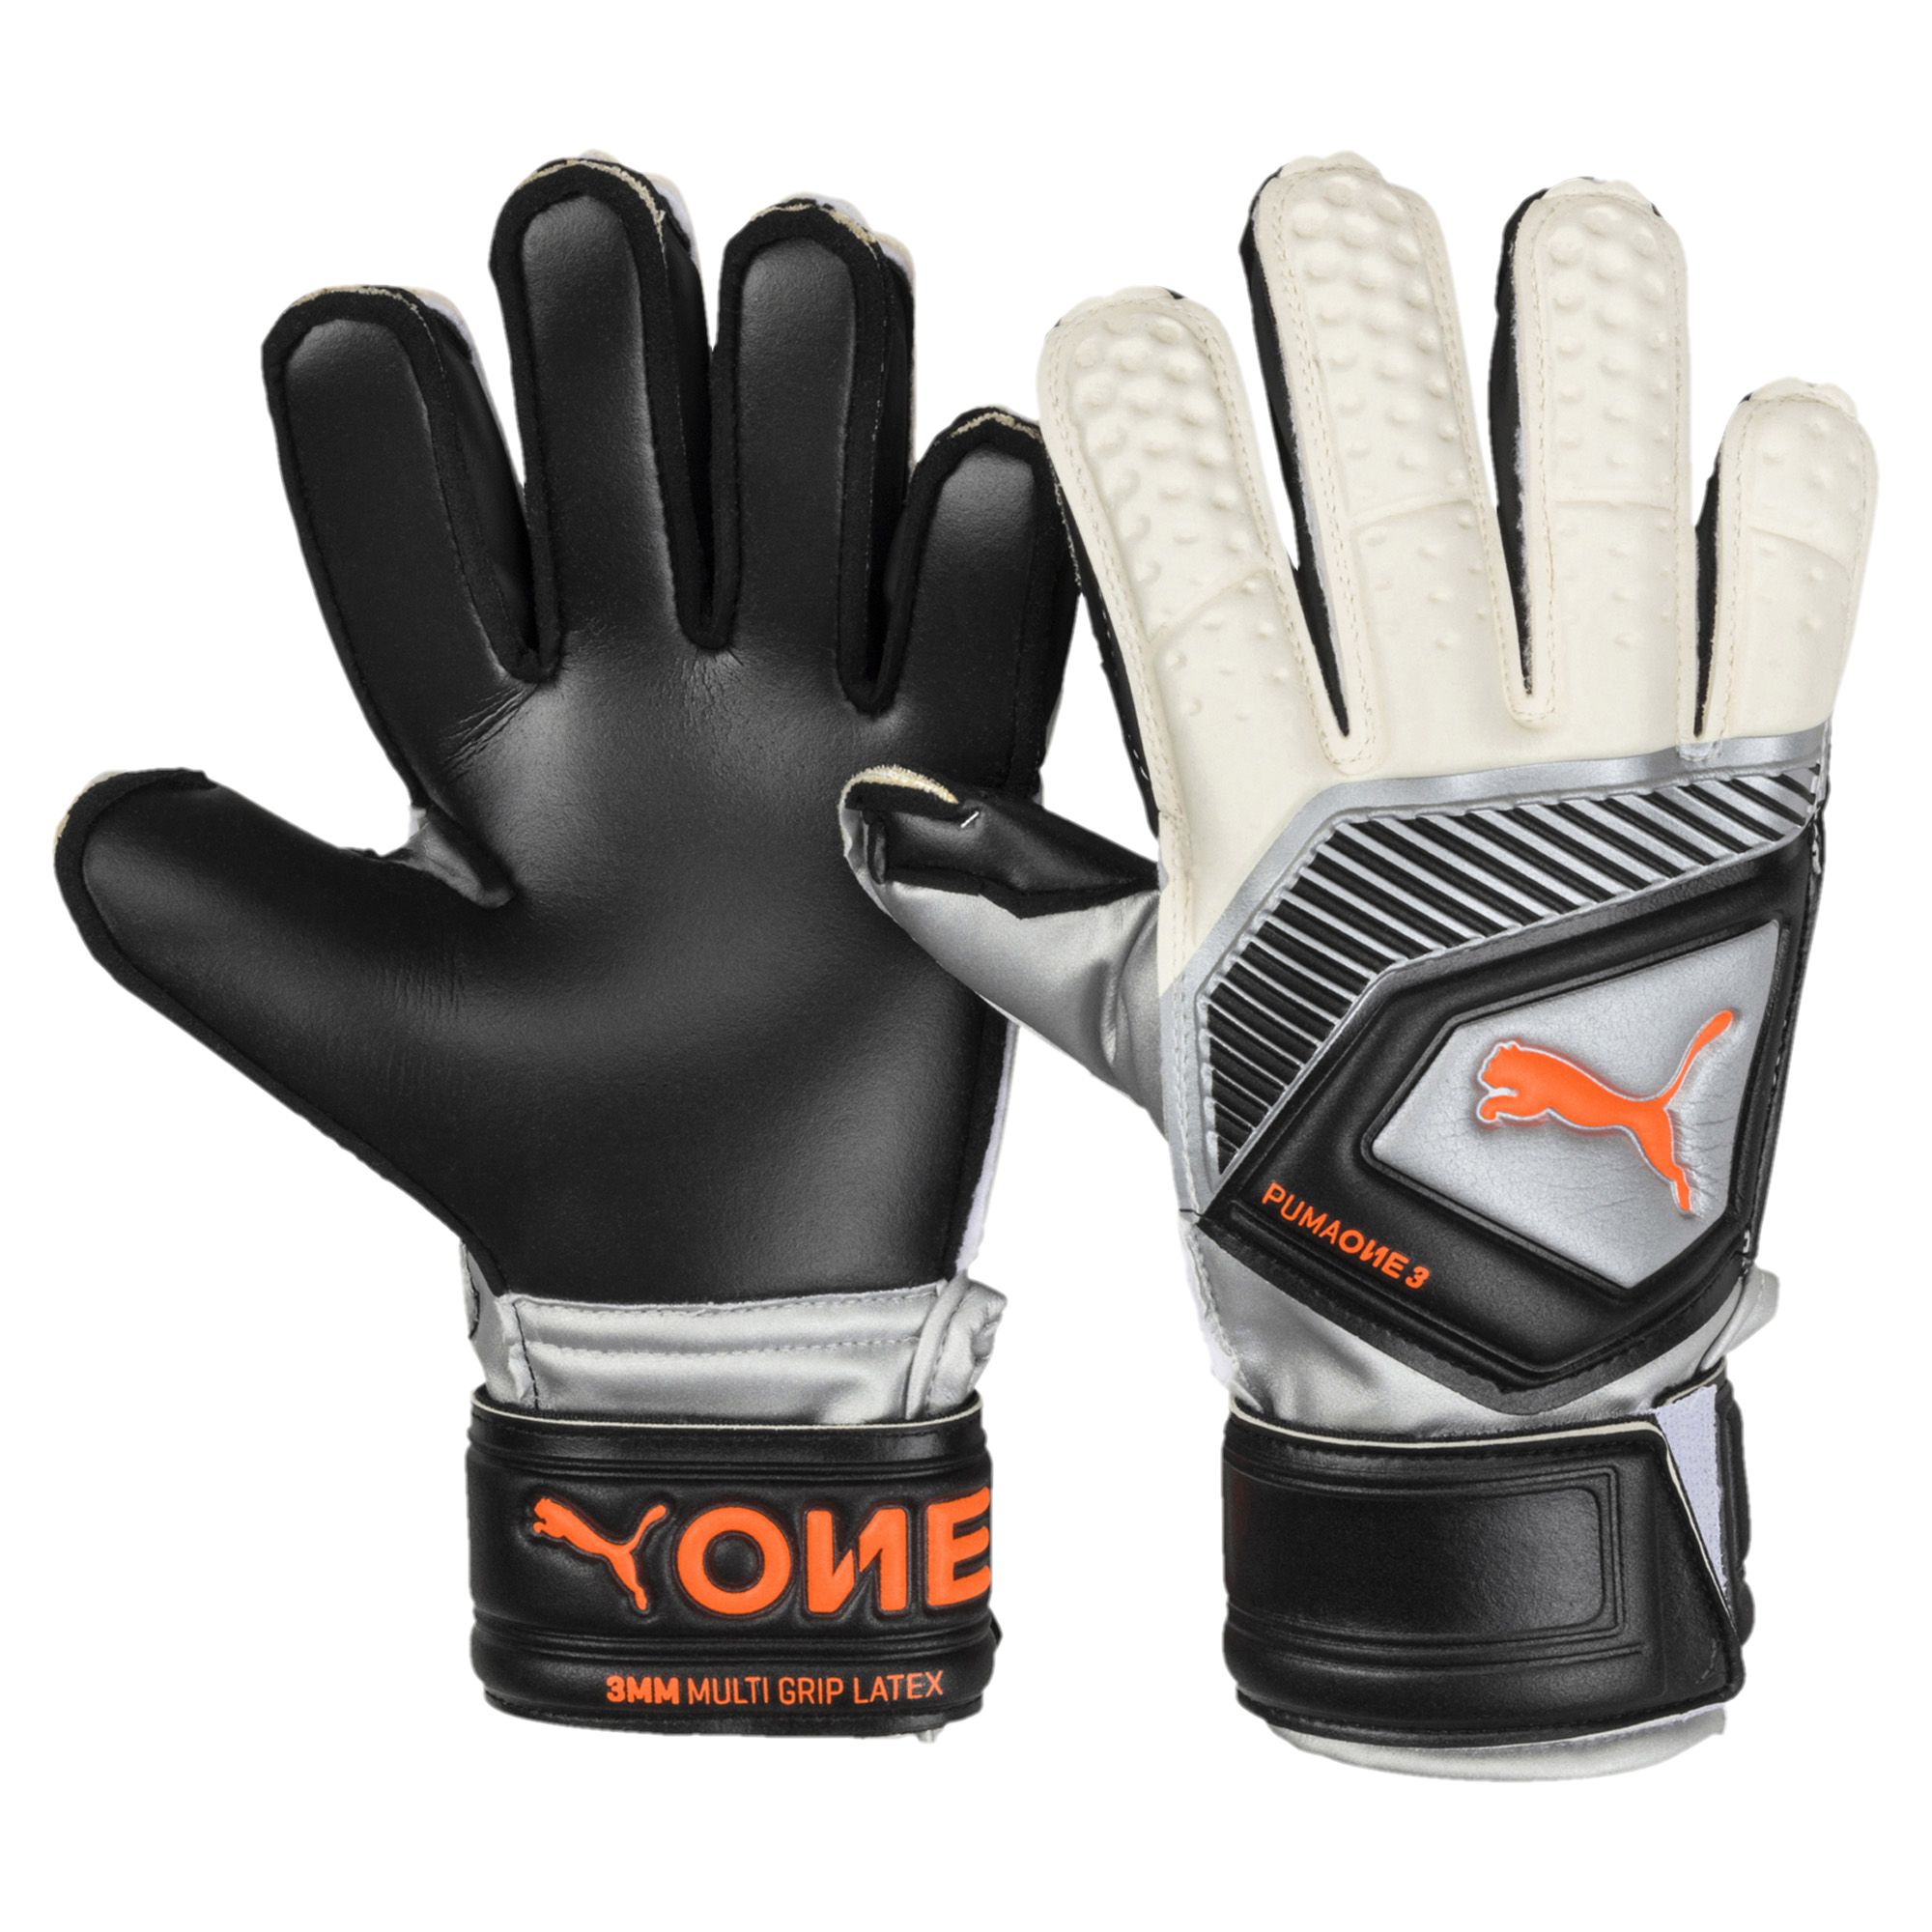 puma fingersave goalkeeper gloves